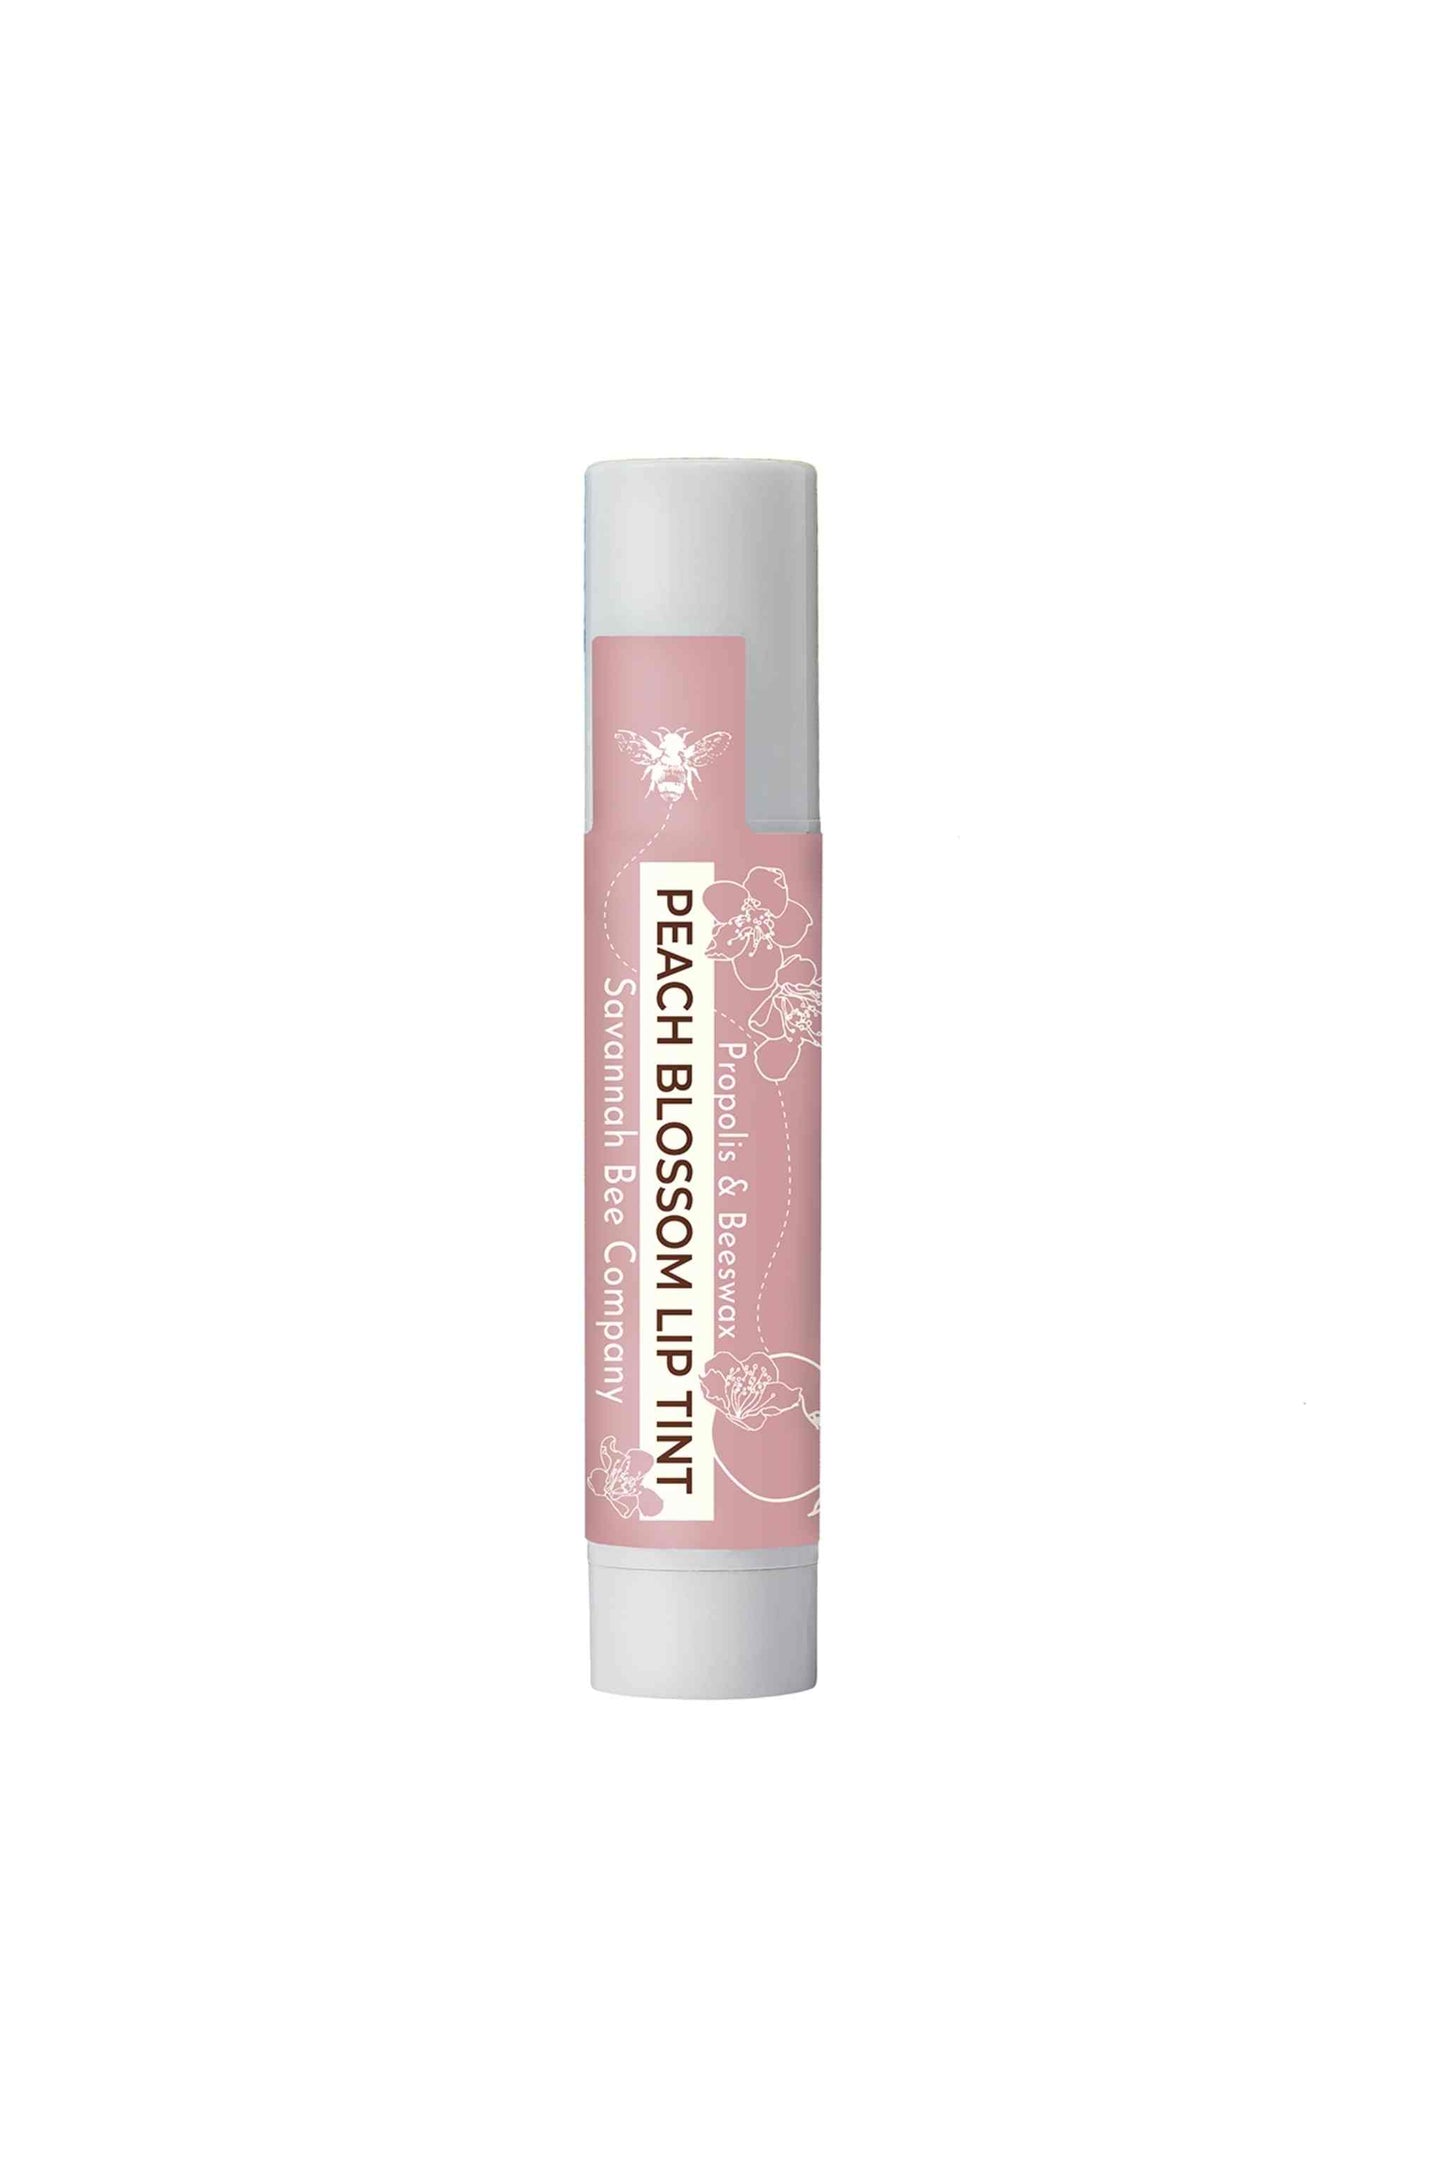 Savannah Bee Company Beeswax Peach Blossom Lip Tint peach and white lipstick tube.